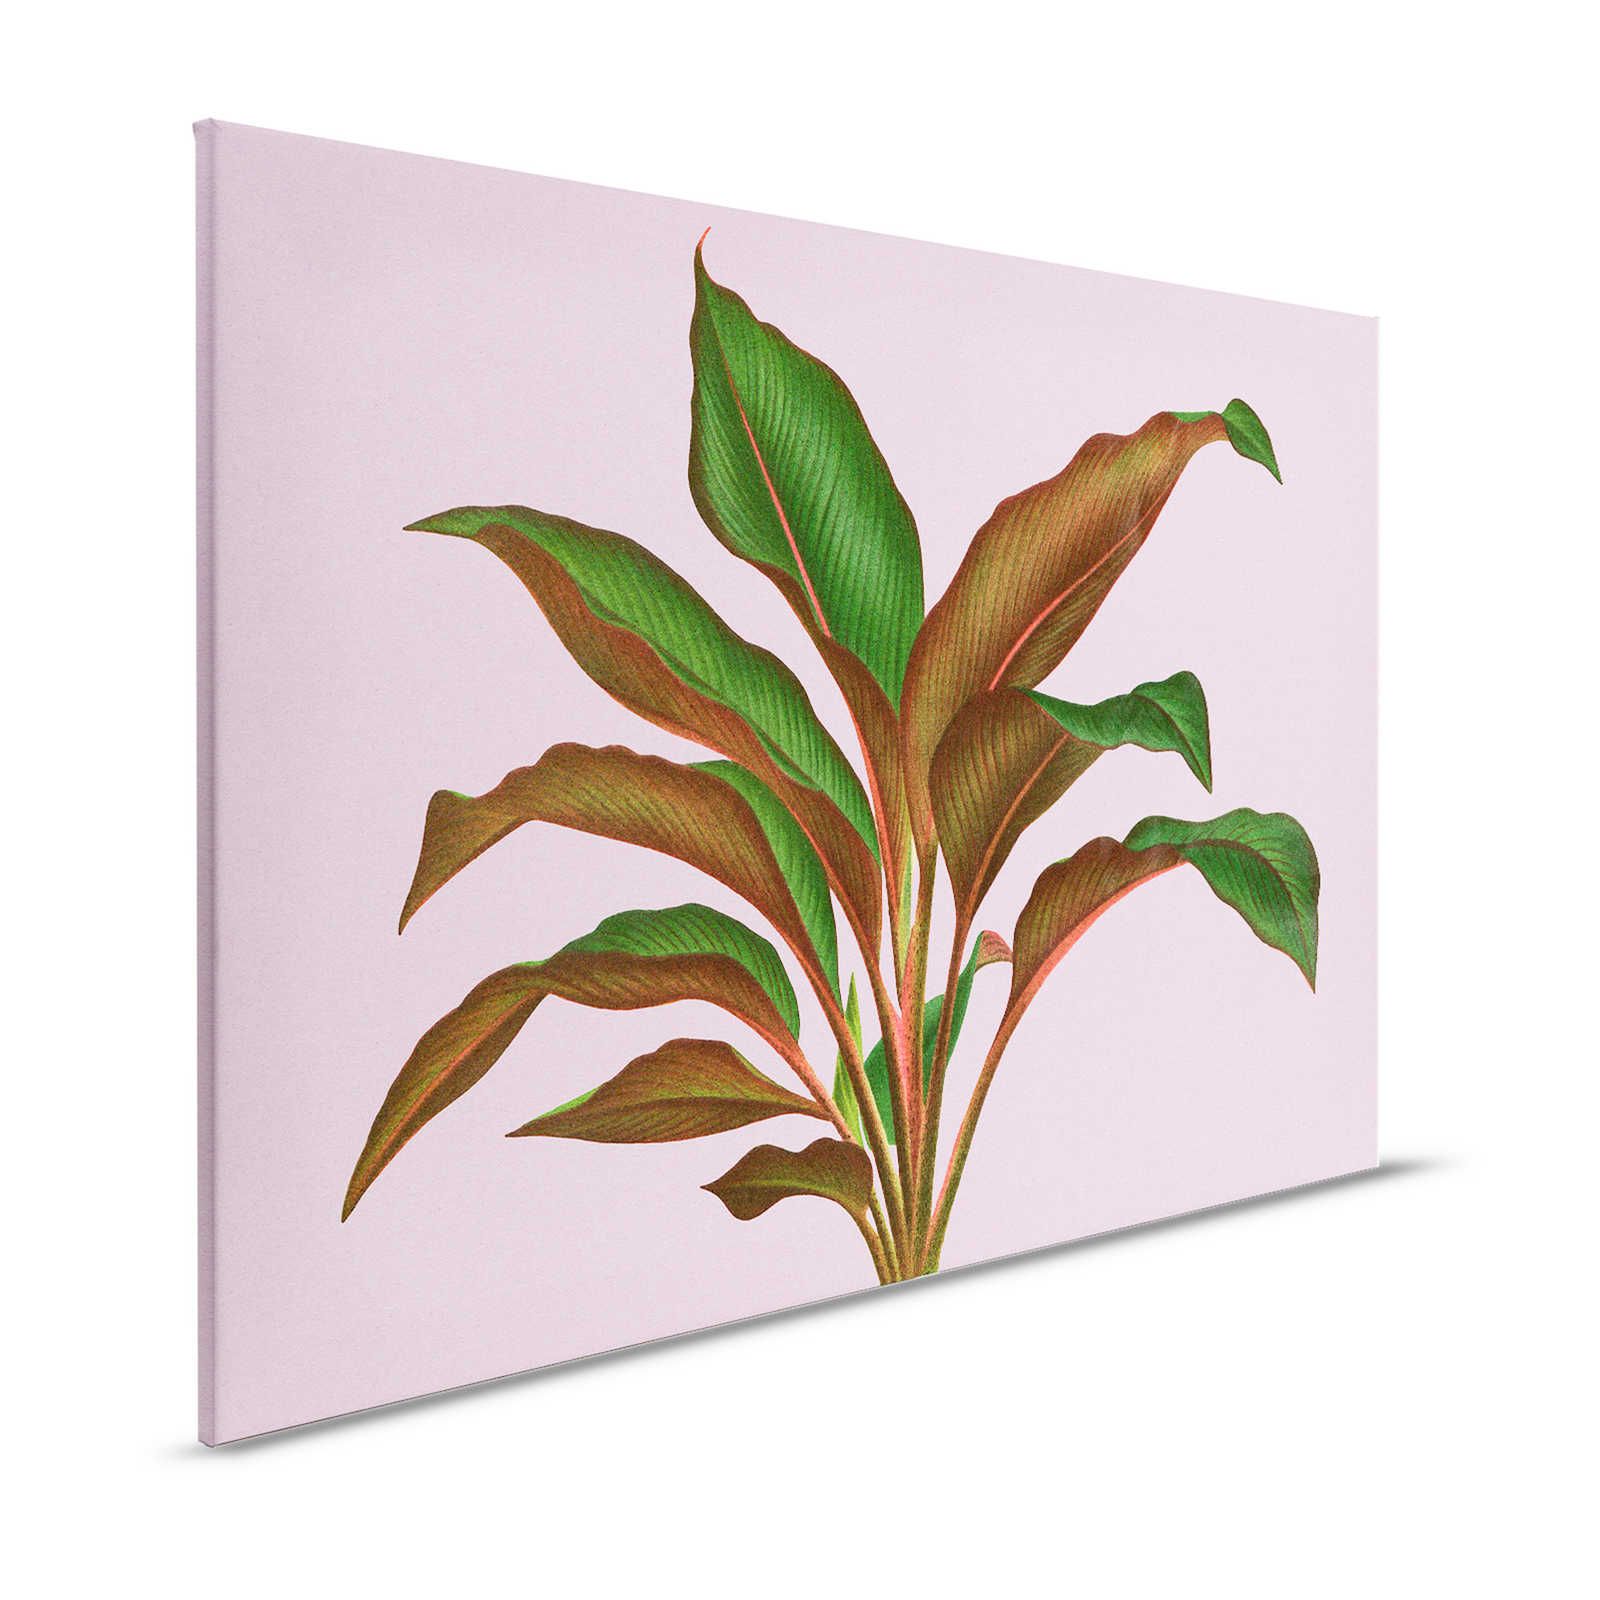 Leaf Garden 3 - Blätter Leinwandbild Rosa mit tropischem Farnblatt – 1,20 m x 0,80 m
